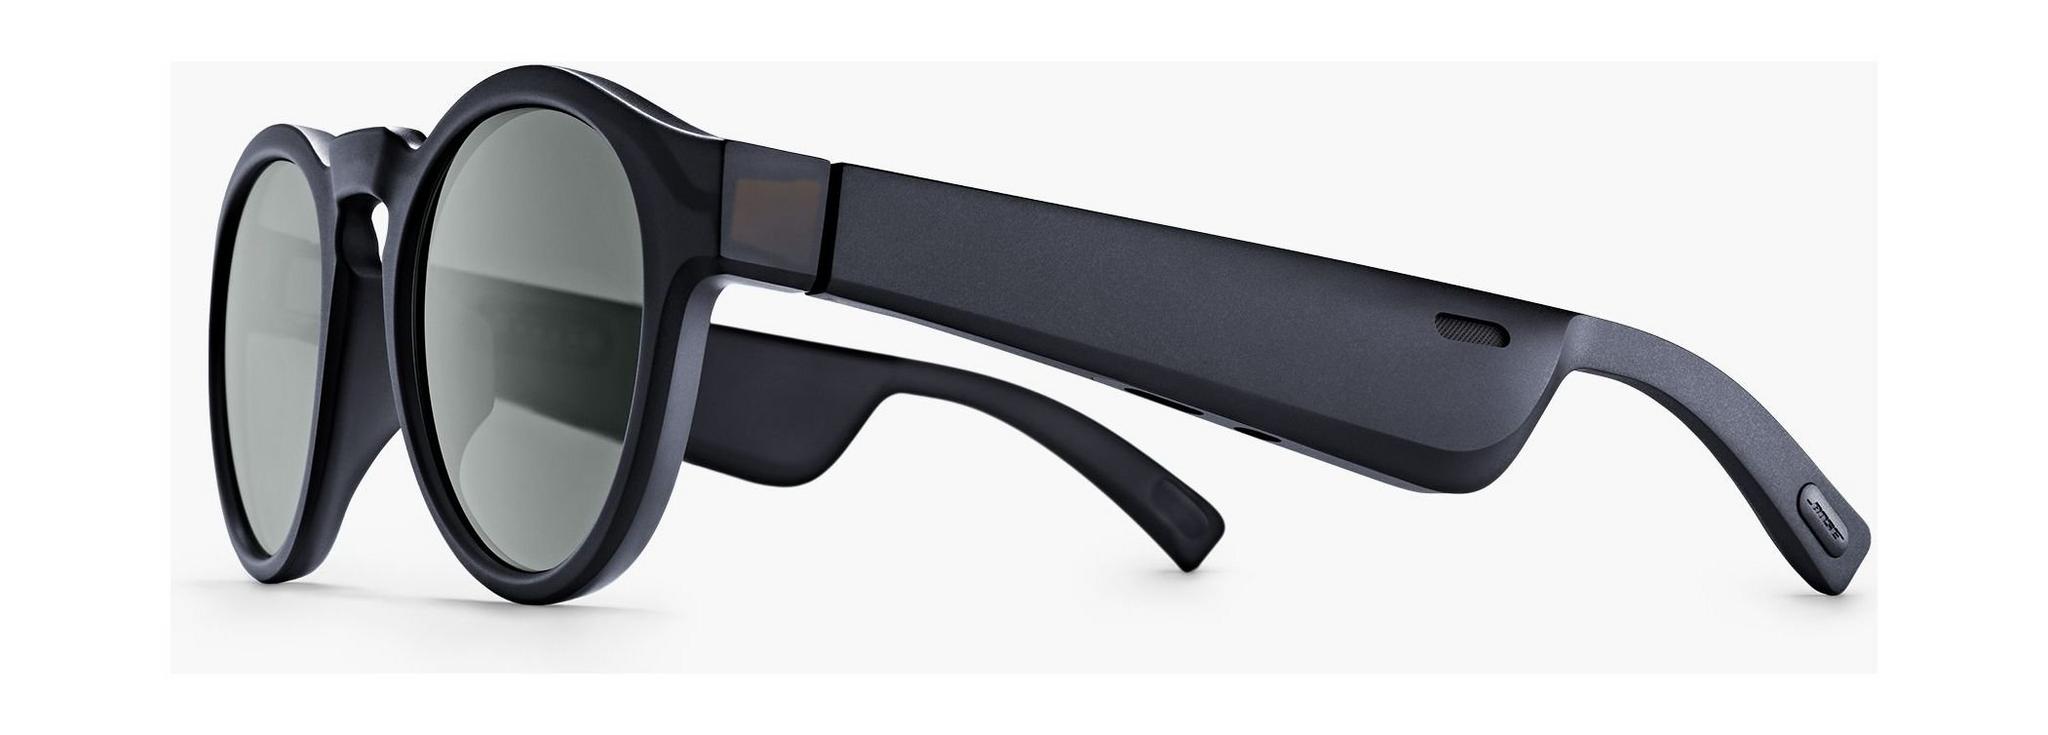 Bose Frames Audio Sunglasses - Rondo - Small/Medium